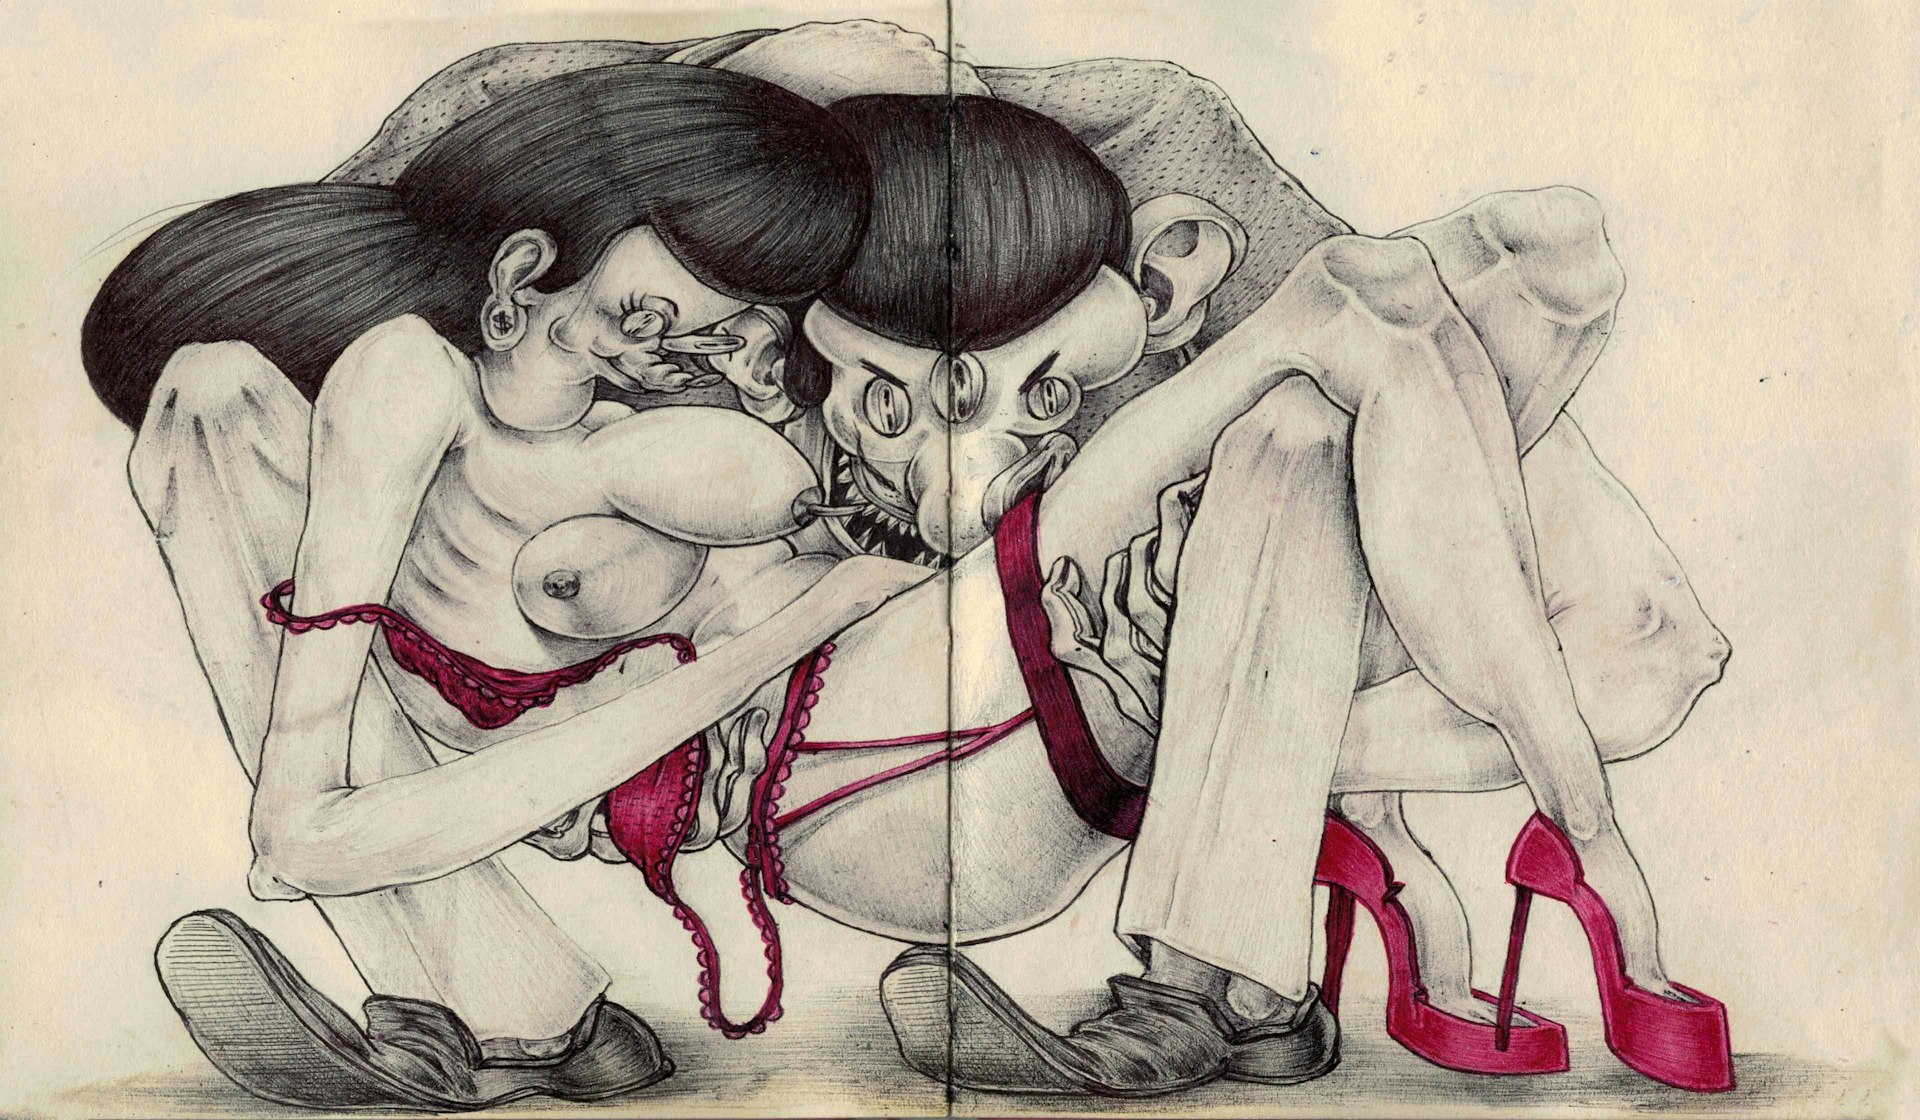 In Pictures: Mario’s Maplés grotesque erotica parodies our desire for intimacy